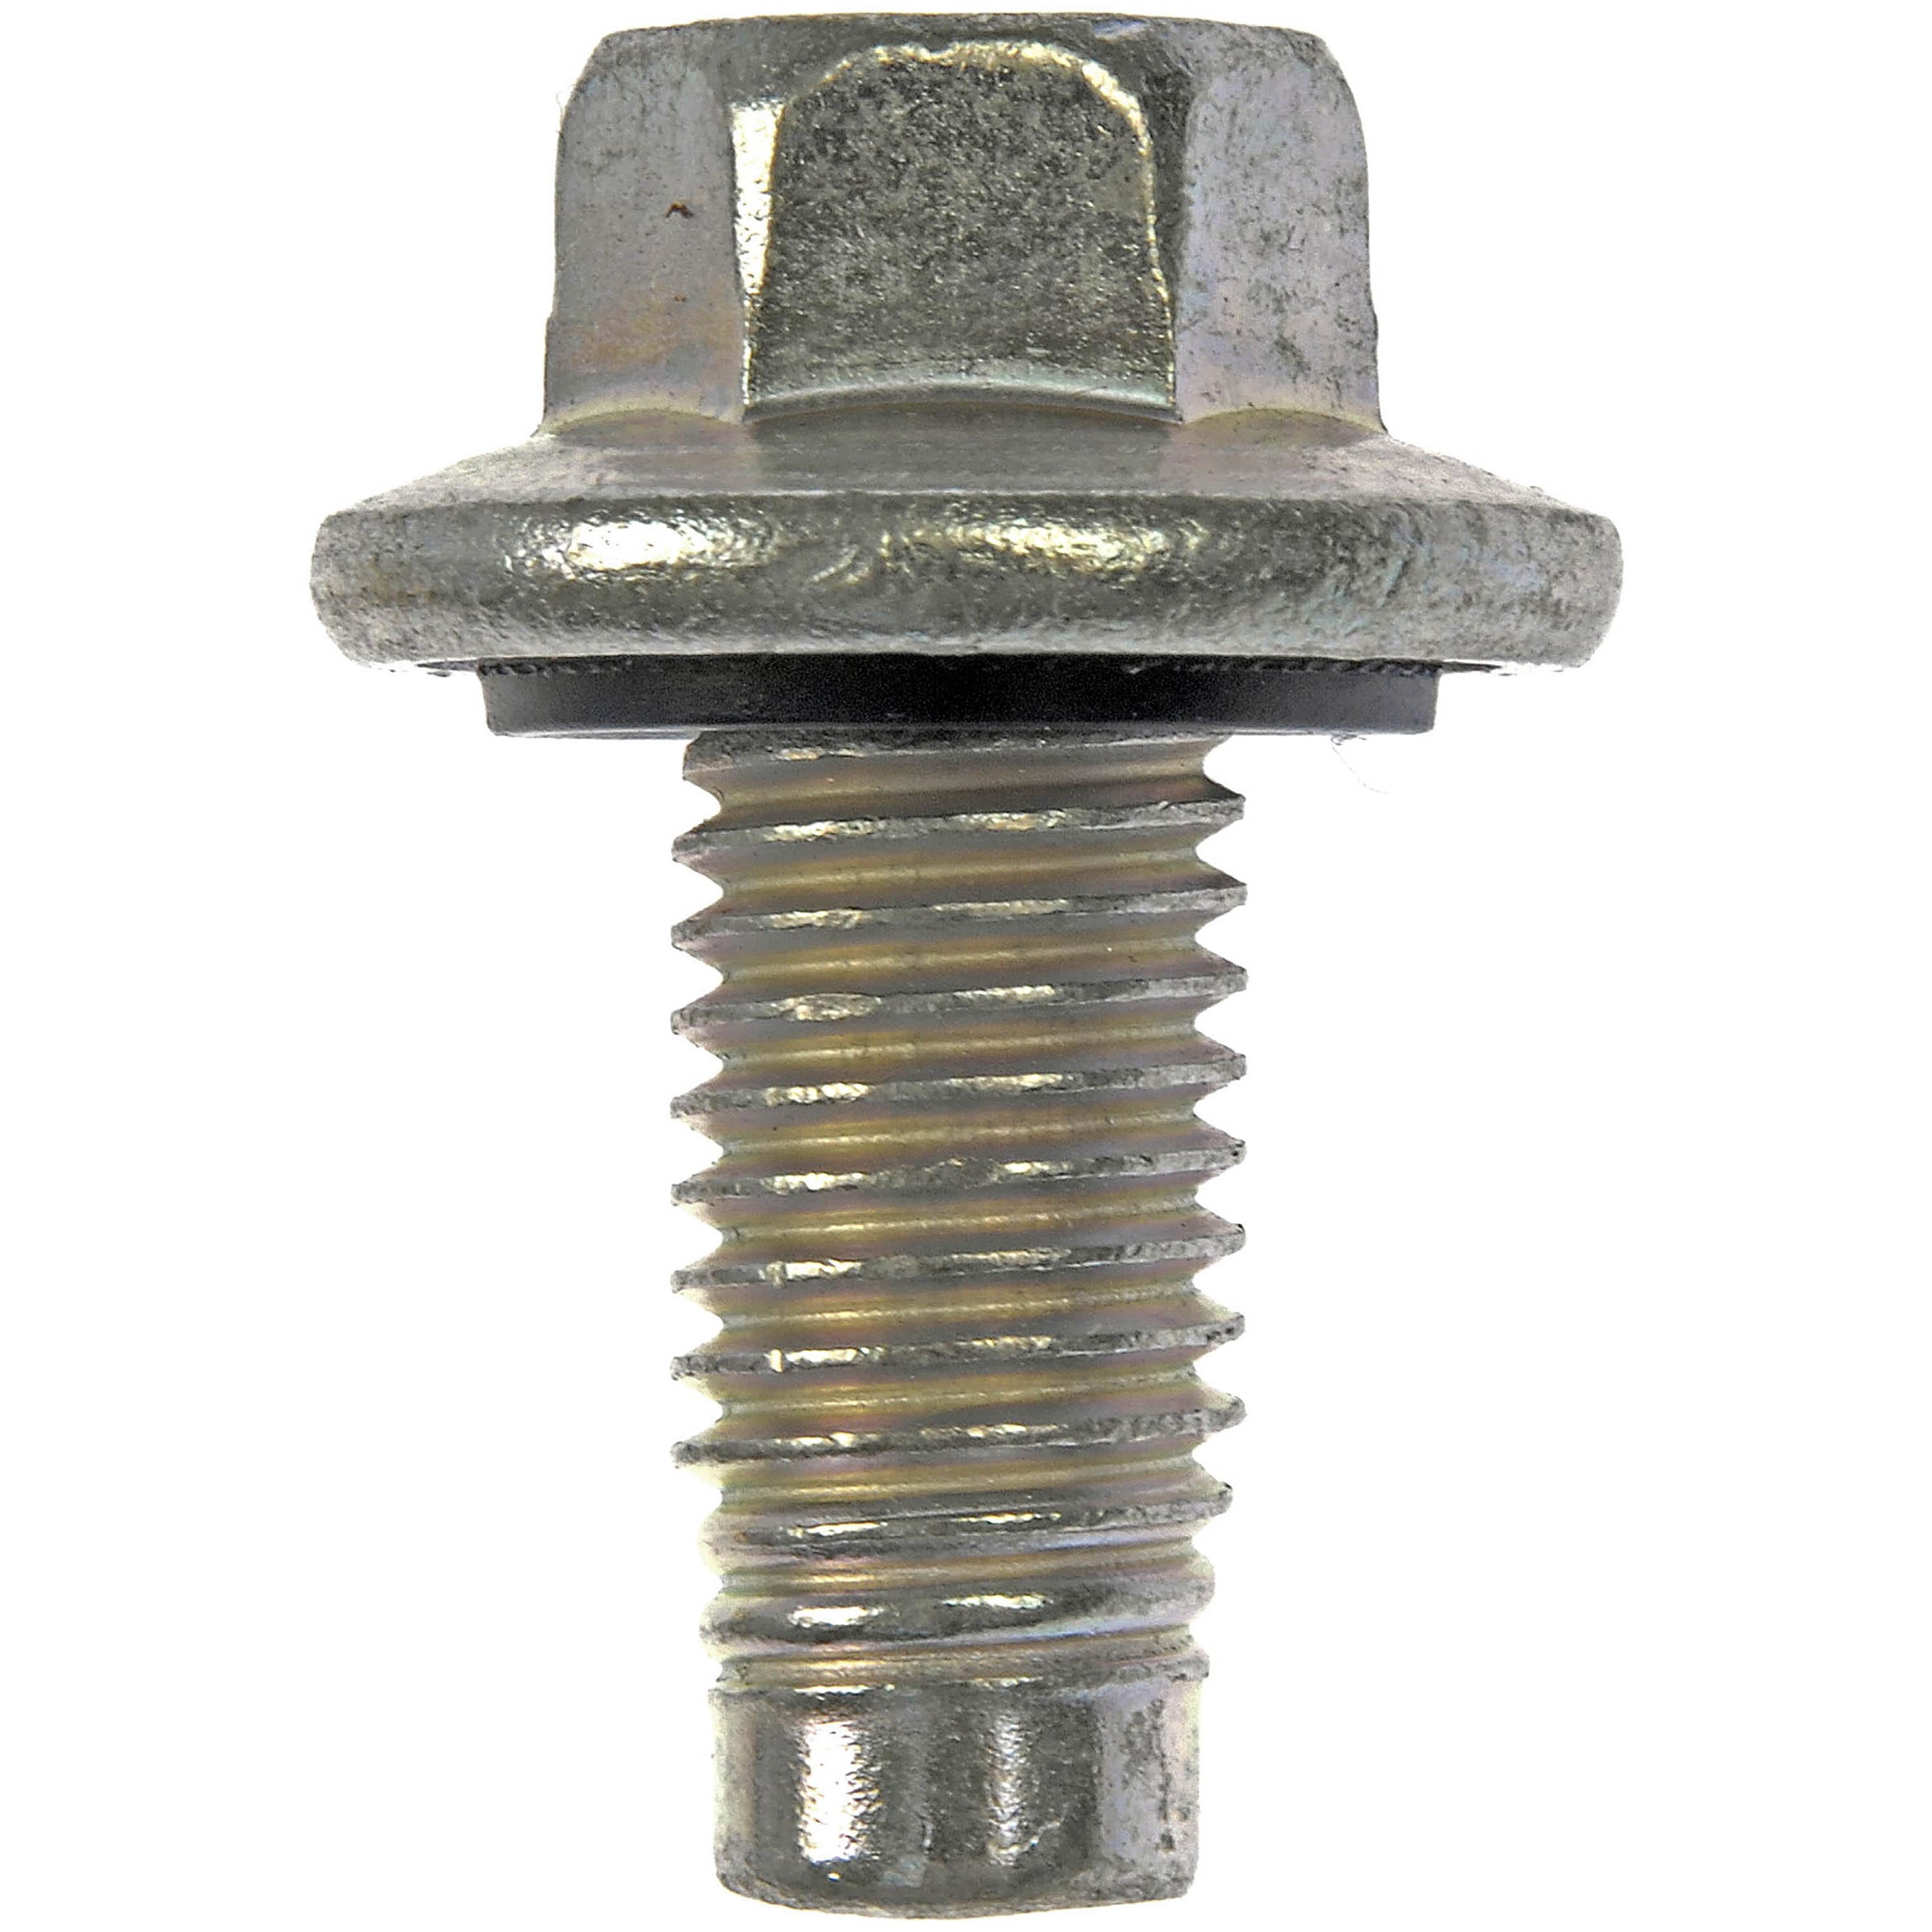 8607 - GM Oil Drain Plug Tool — CTA Manufacturing